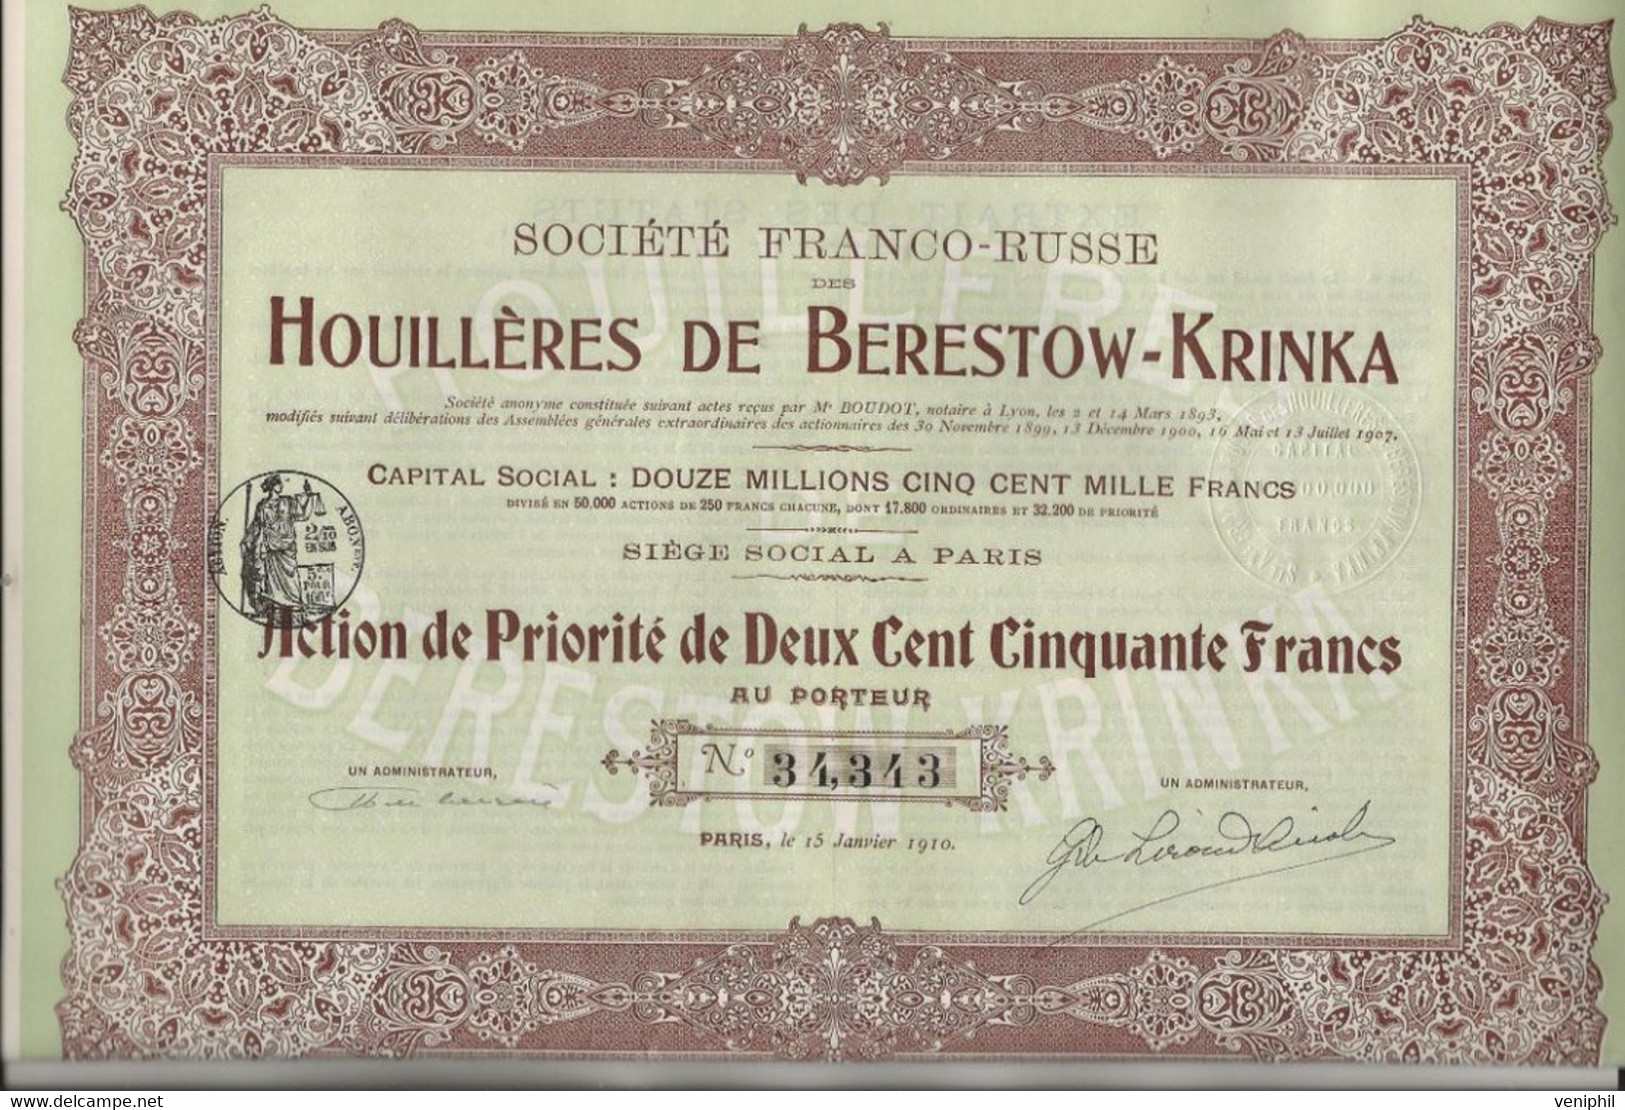 SOCIETE FRANCO -RUSSE DES HOUILLERES DE BERESTOW - KRINKA - LOT DE 3 ACTIONS DE PRIORITE DE 250 FRS -ANNEE 1910 - Bergbau